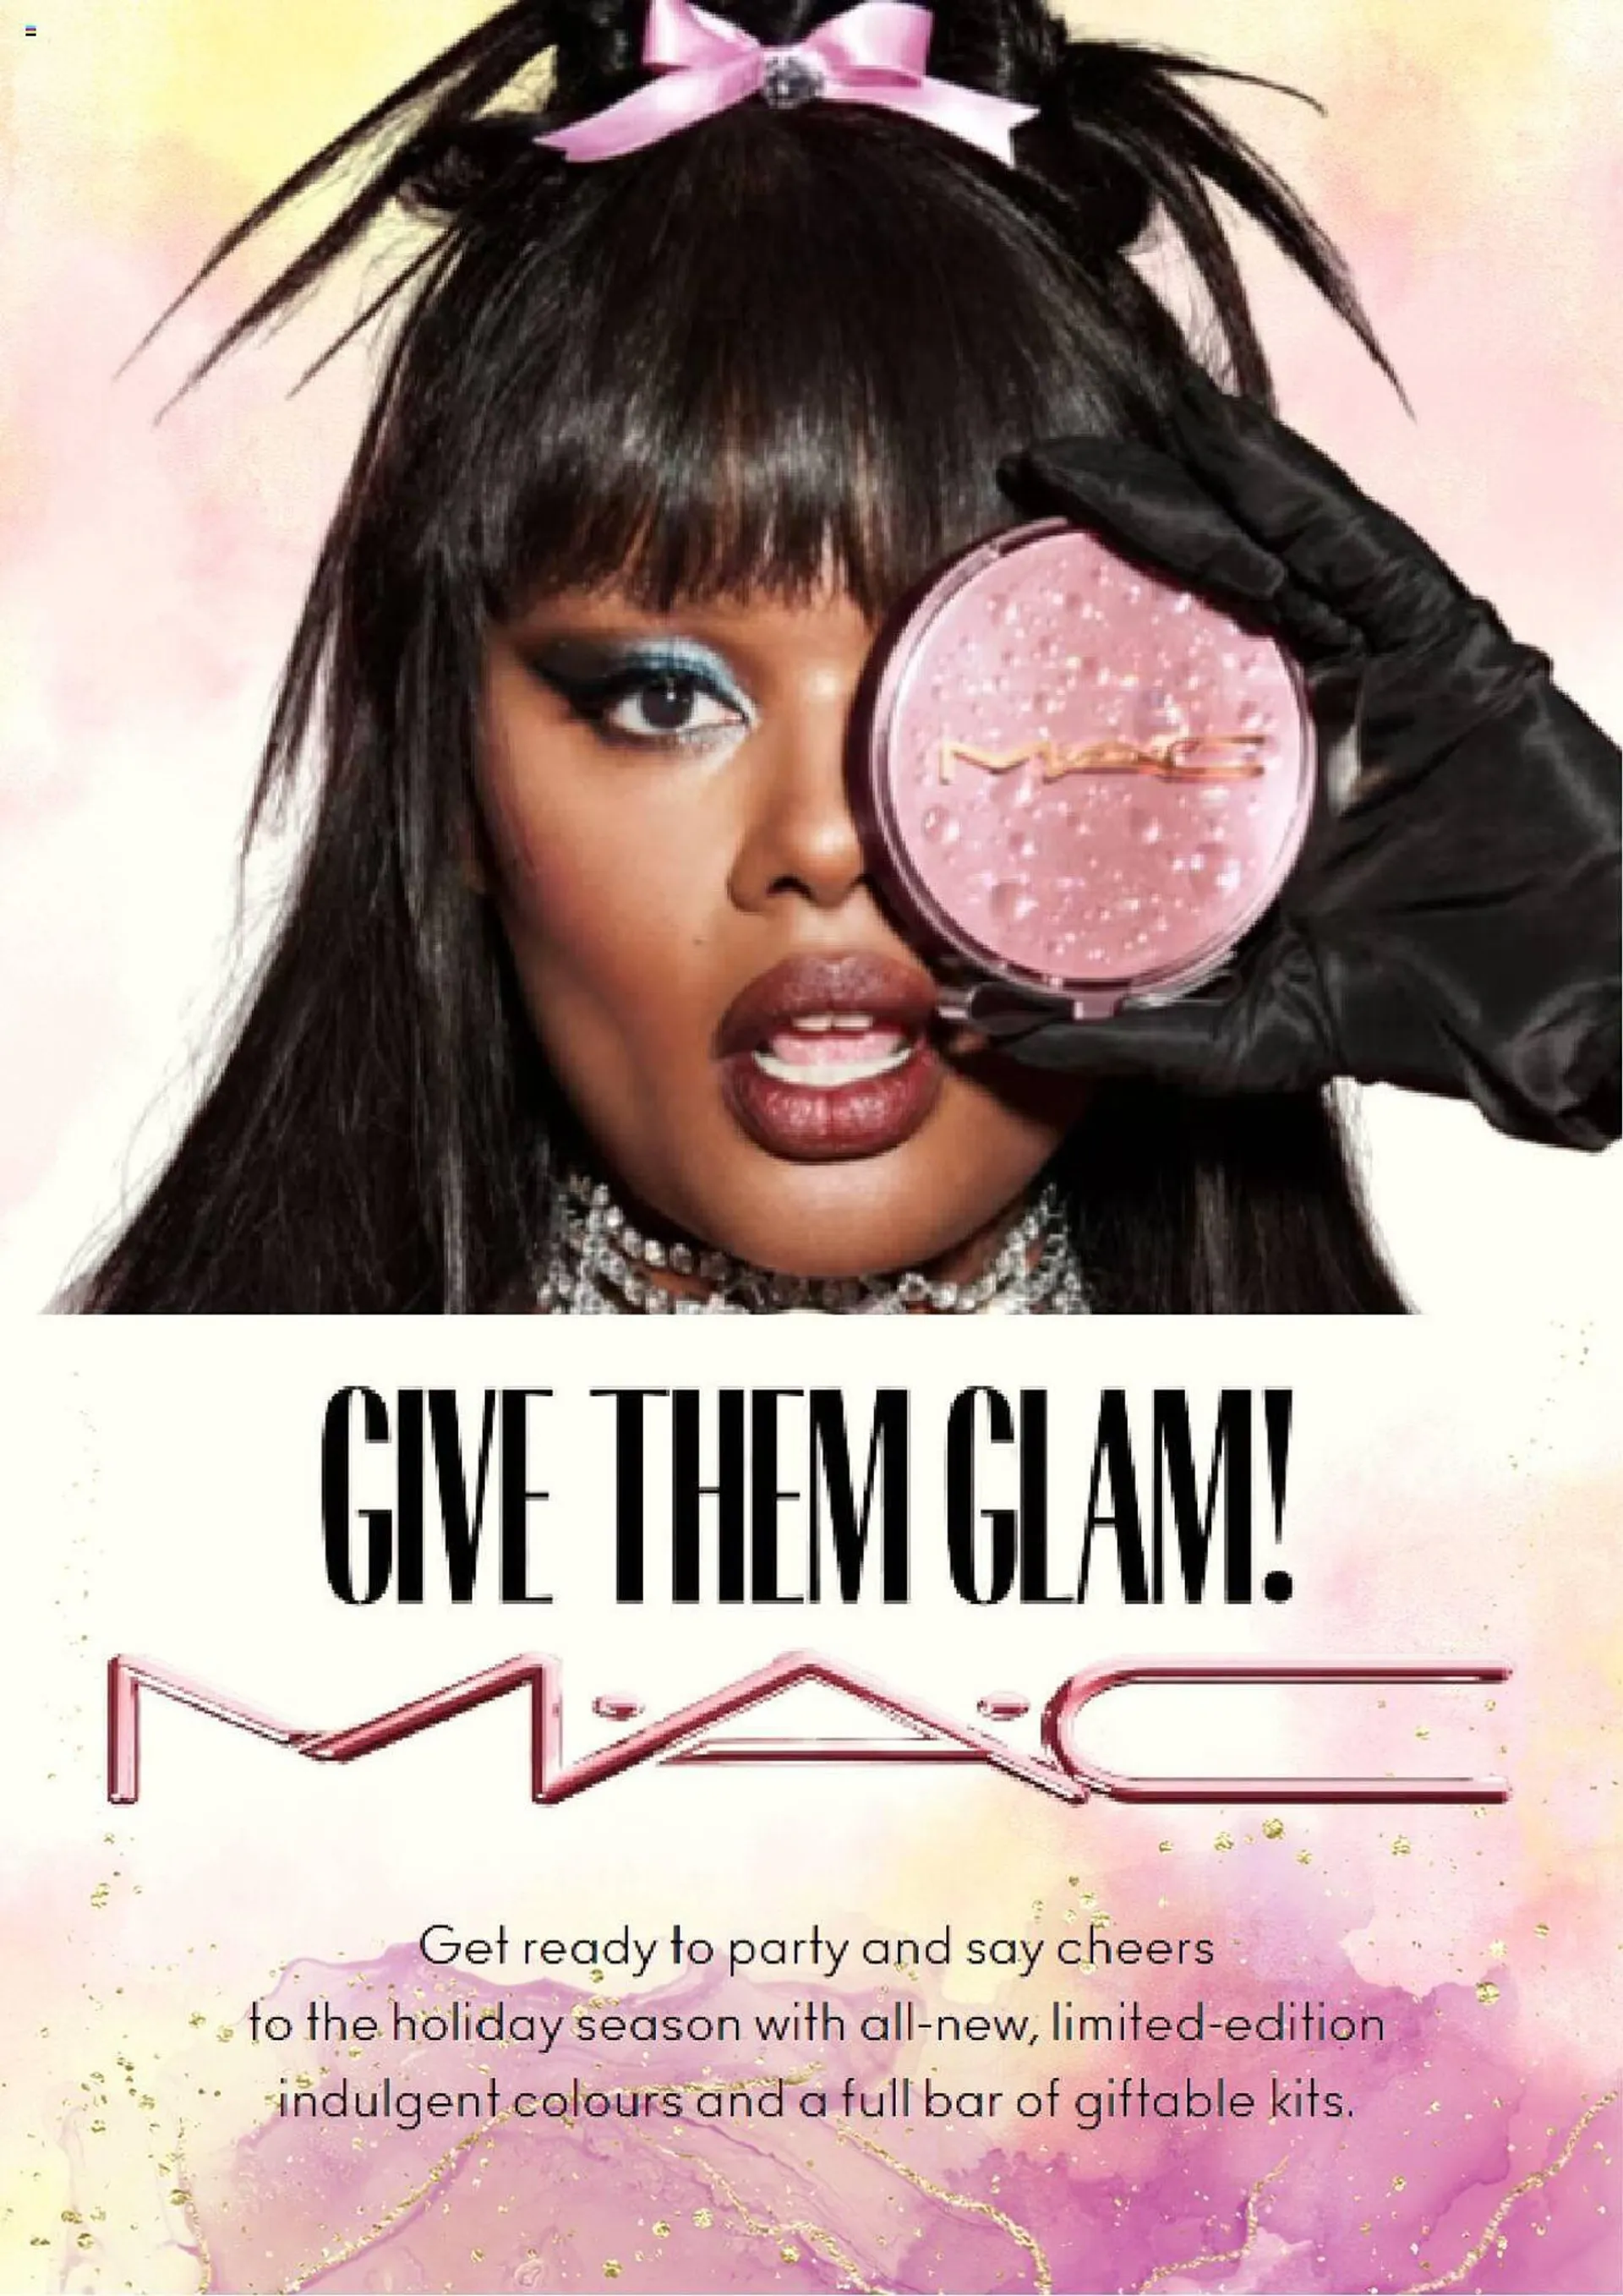 MAC Cosmetics leaflet - 1